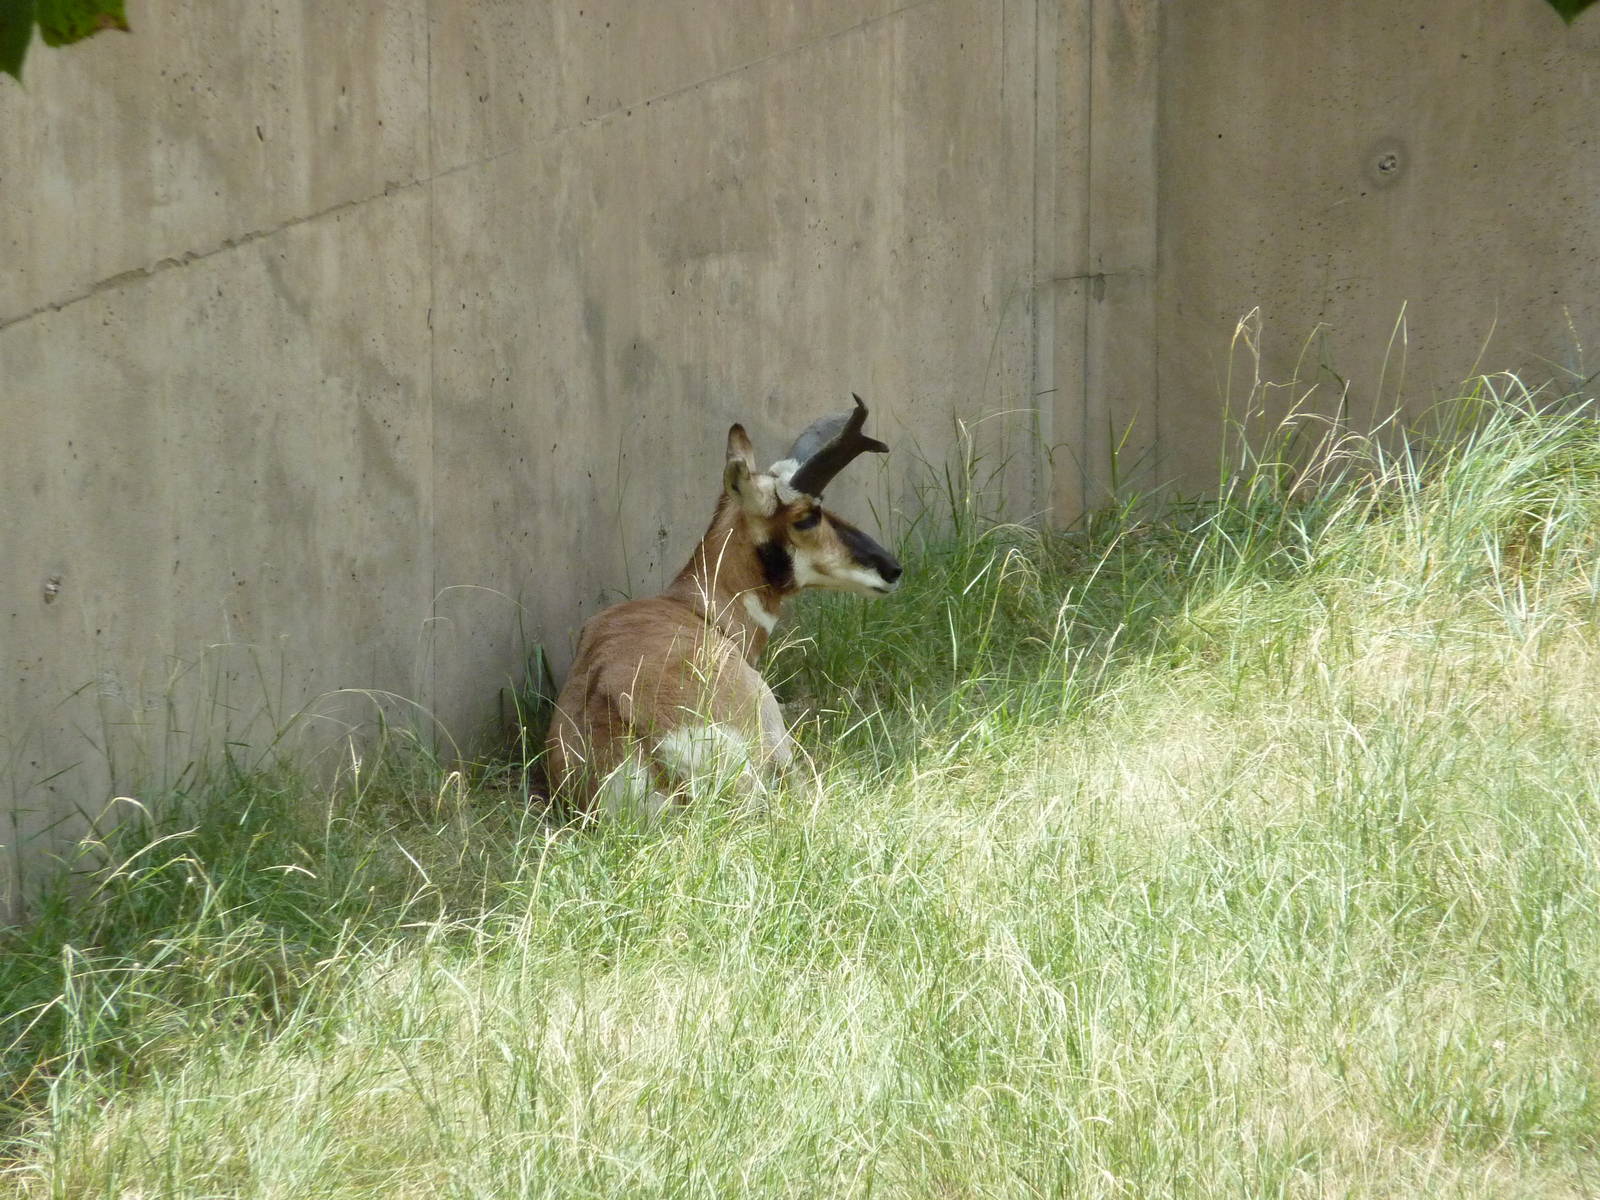 North America - Pronghorn Antelope | ZooChat